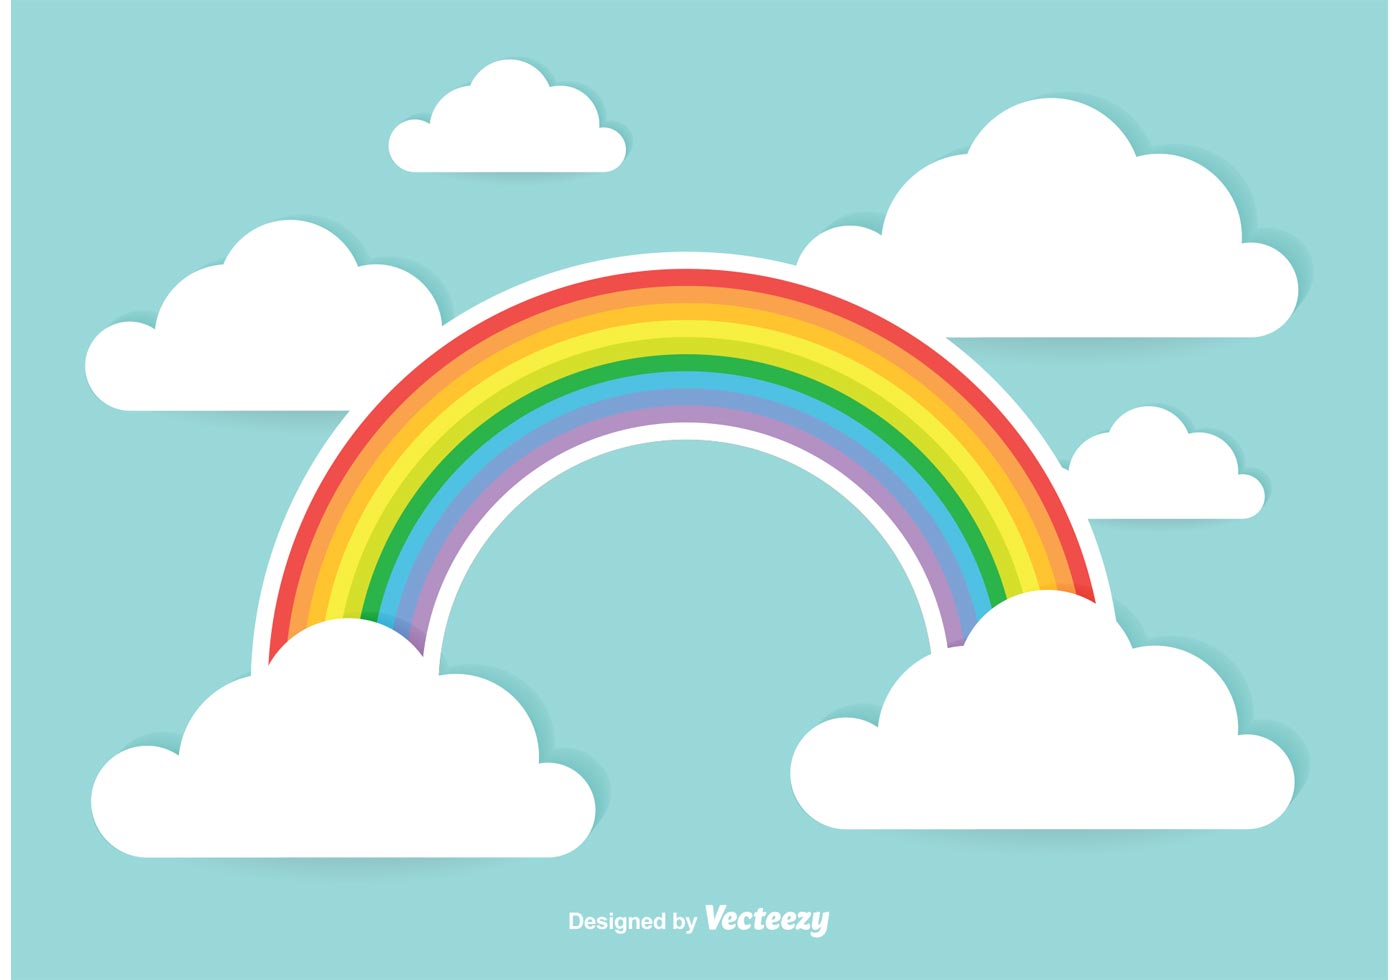 Rainbow Free Vector Art - (13131 Free Downloads)